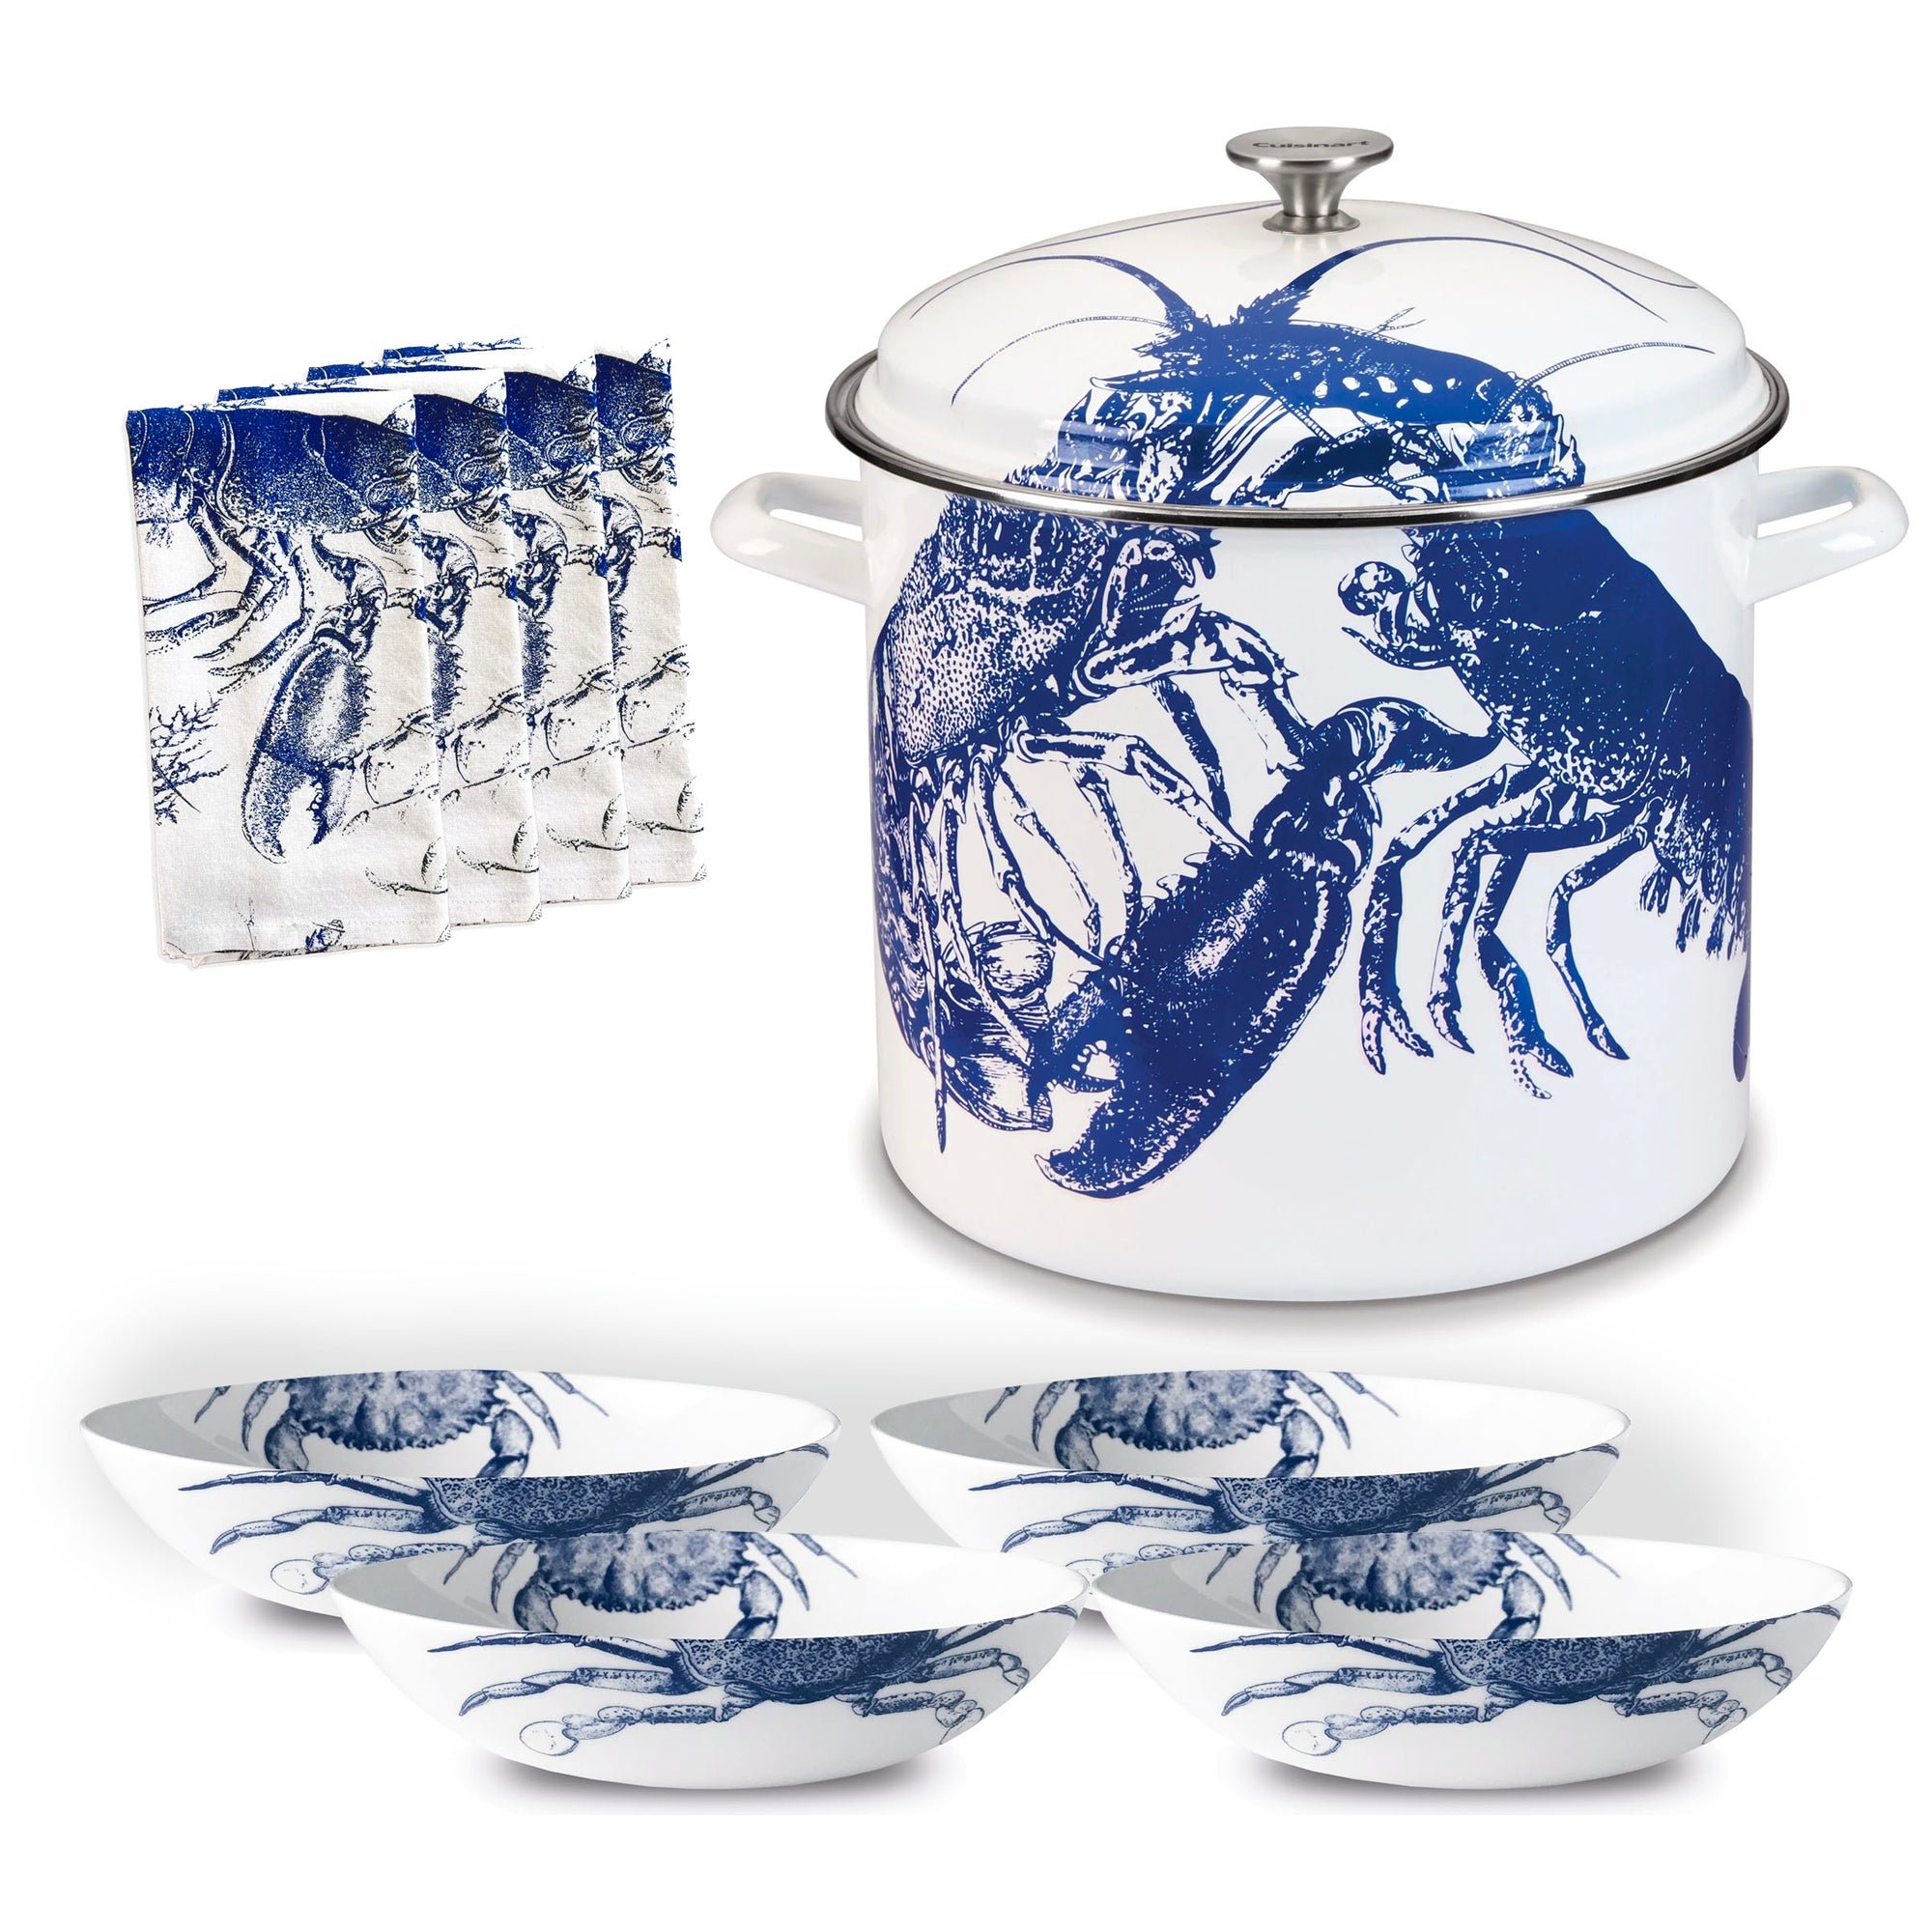 A white kitchen pot with blue lobster designs, paired with blue and white Blue Lobsters Dinner Napkins and six white Crab Entrée Bowls featuring similar motifs, the Lobster Boil Bundle by Caskata.